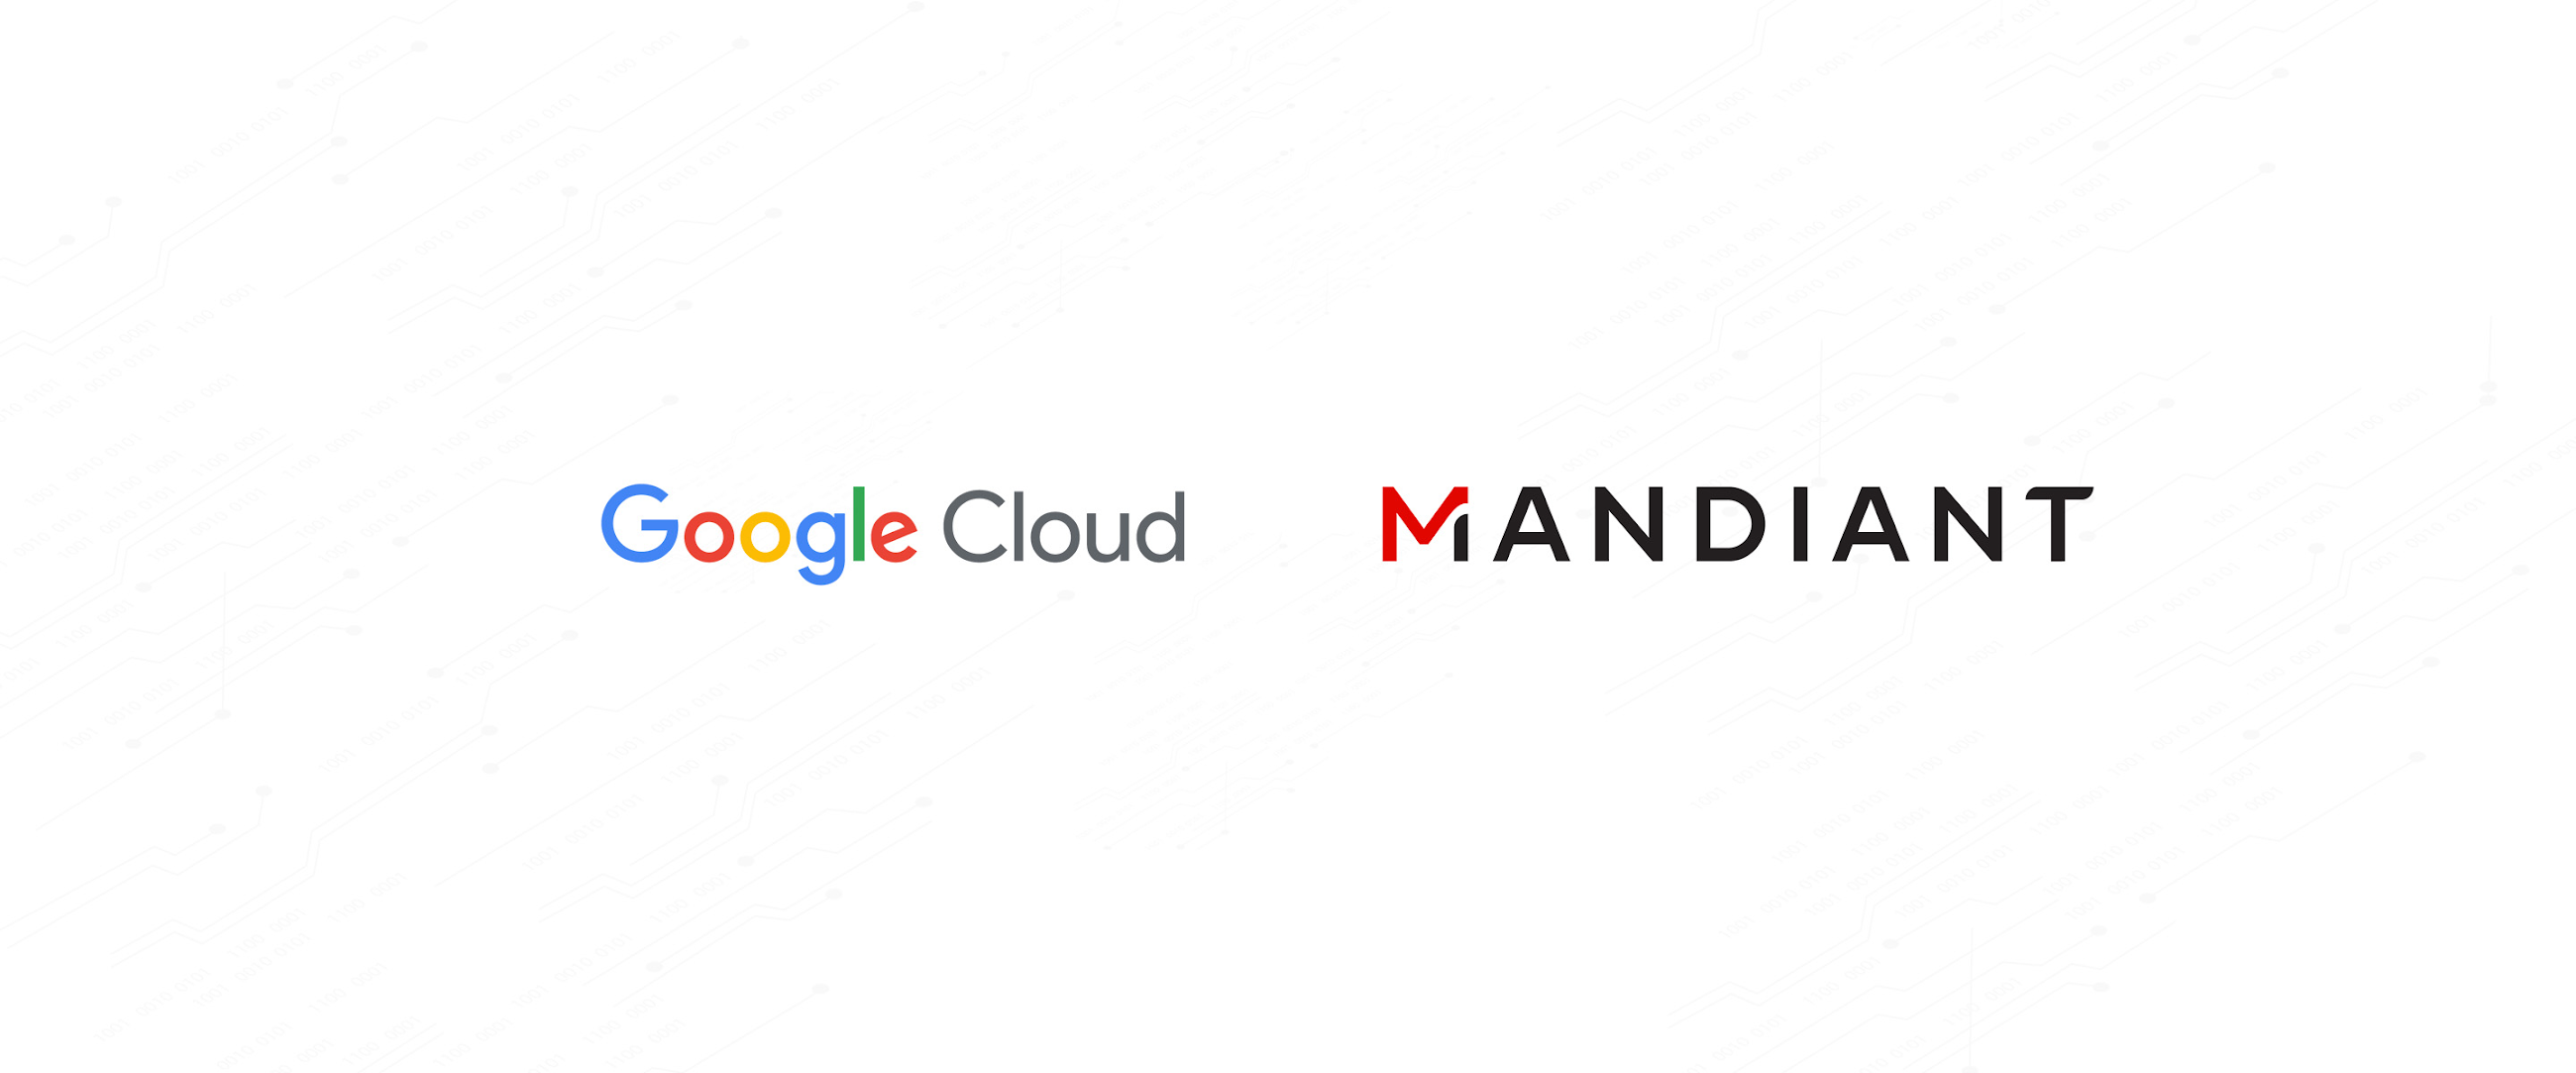 https://storage.googleapis.com/gweb-cloudblog-publish/images/cloud_x_mandiant.max-2600x2600.jpg